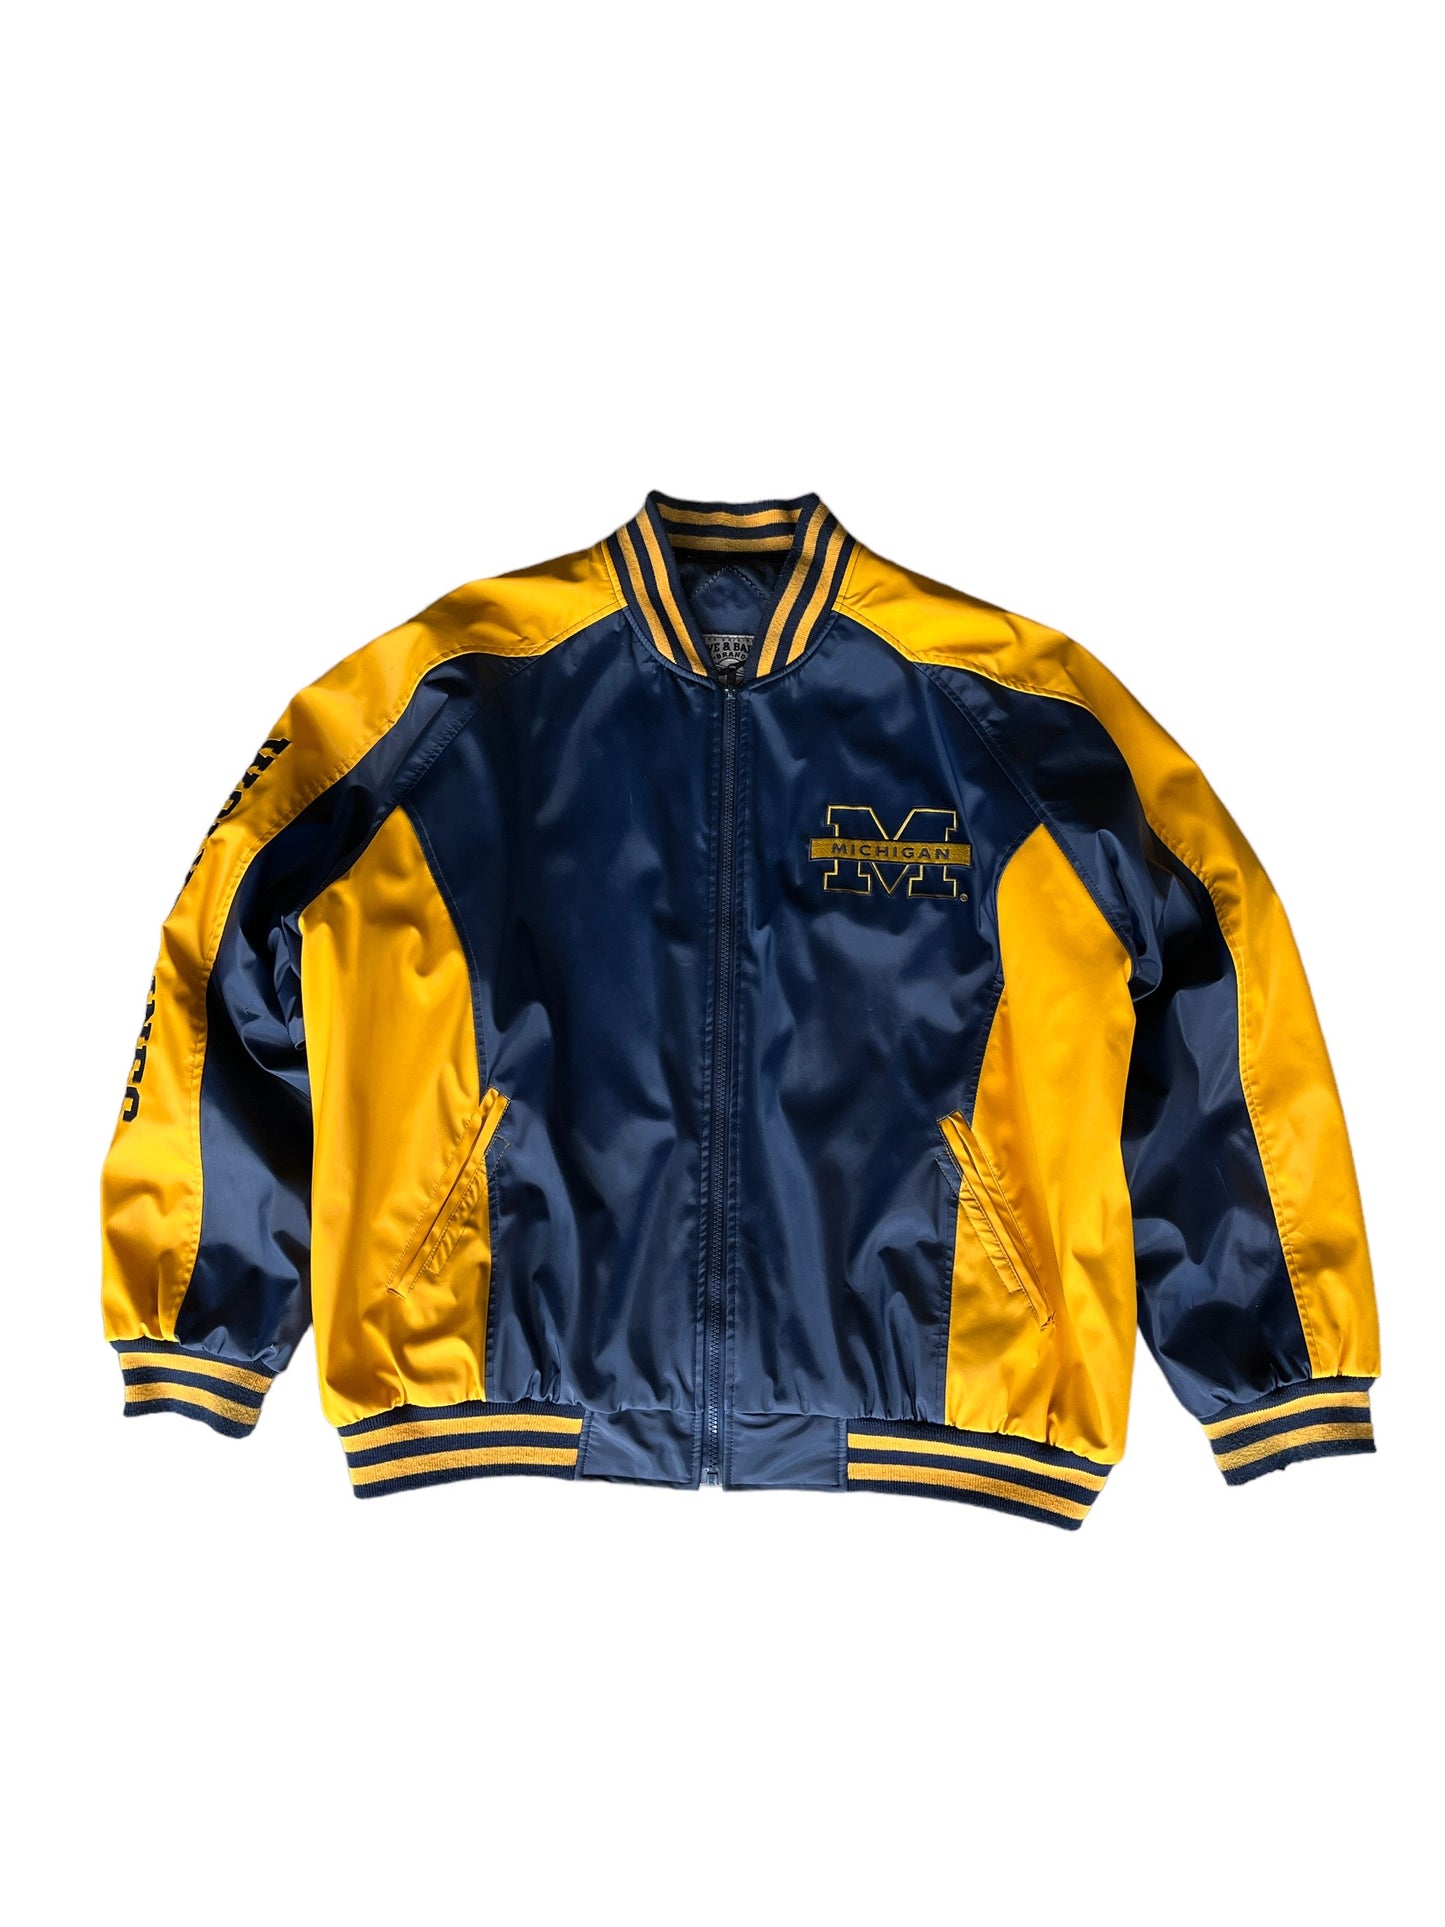 Vintage Michigan Wolverines Leather Bomber Jacket